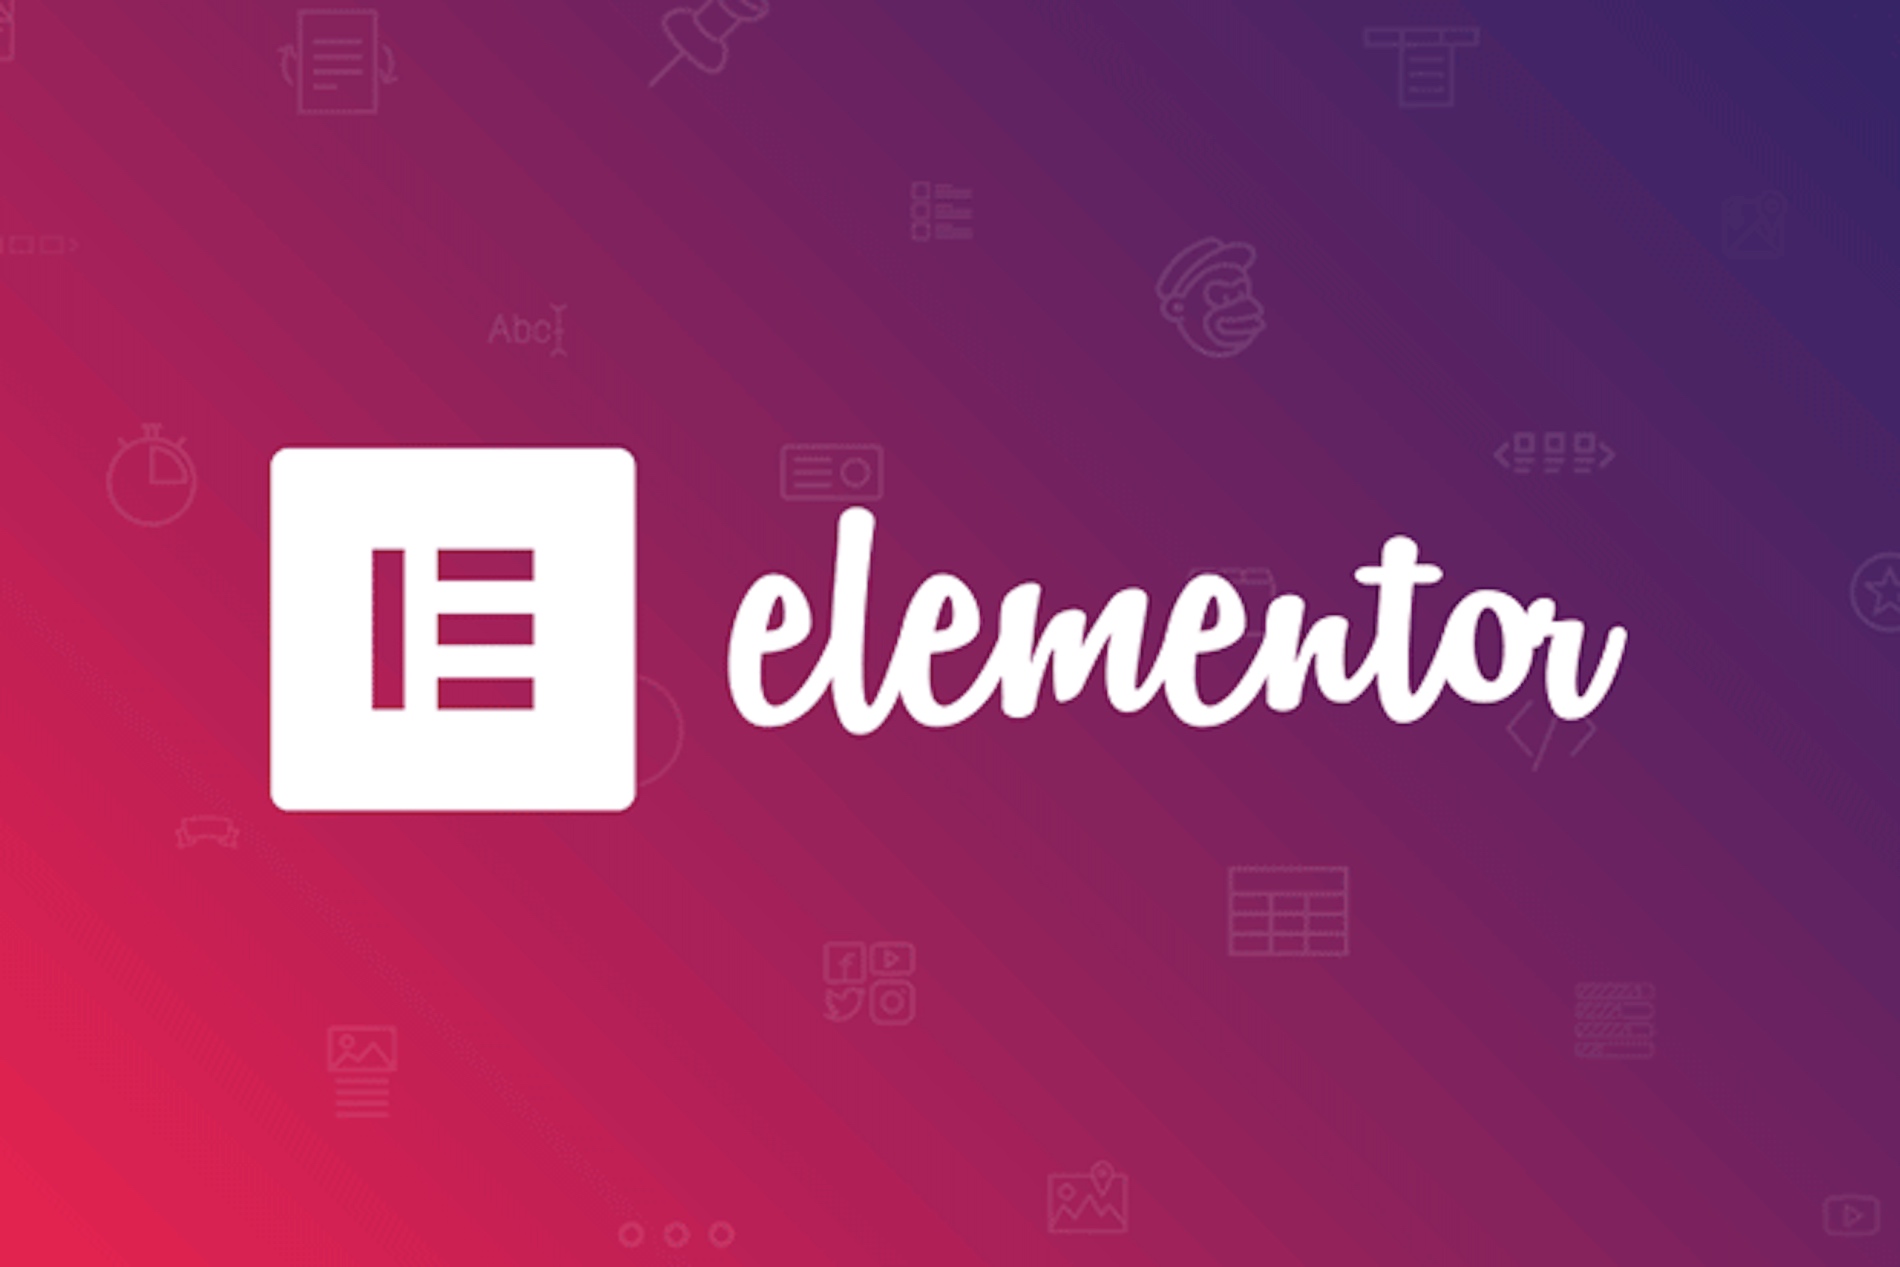 Elementor WordPress plugin official logo